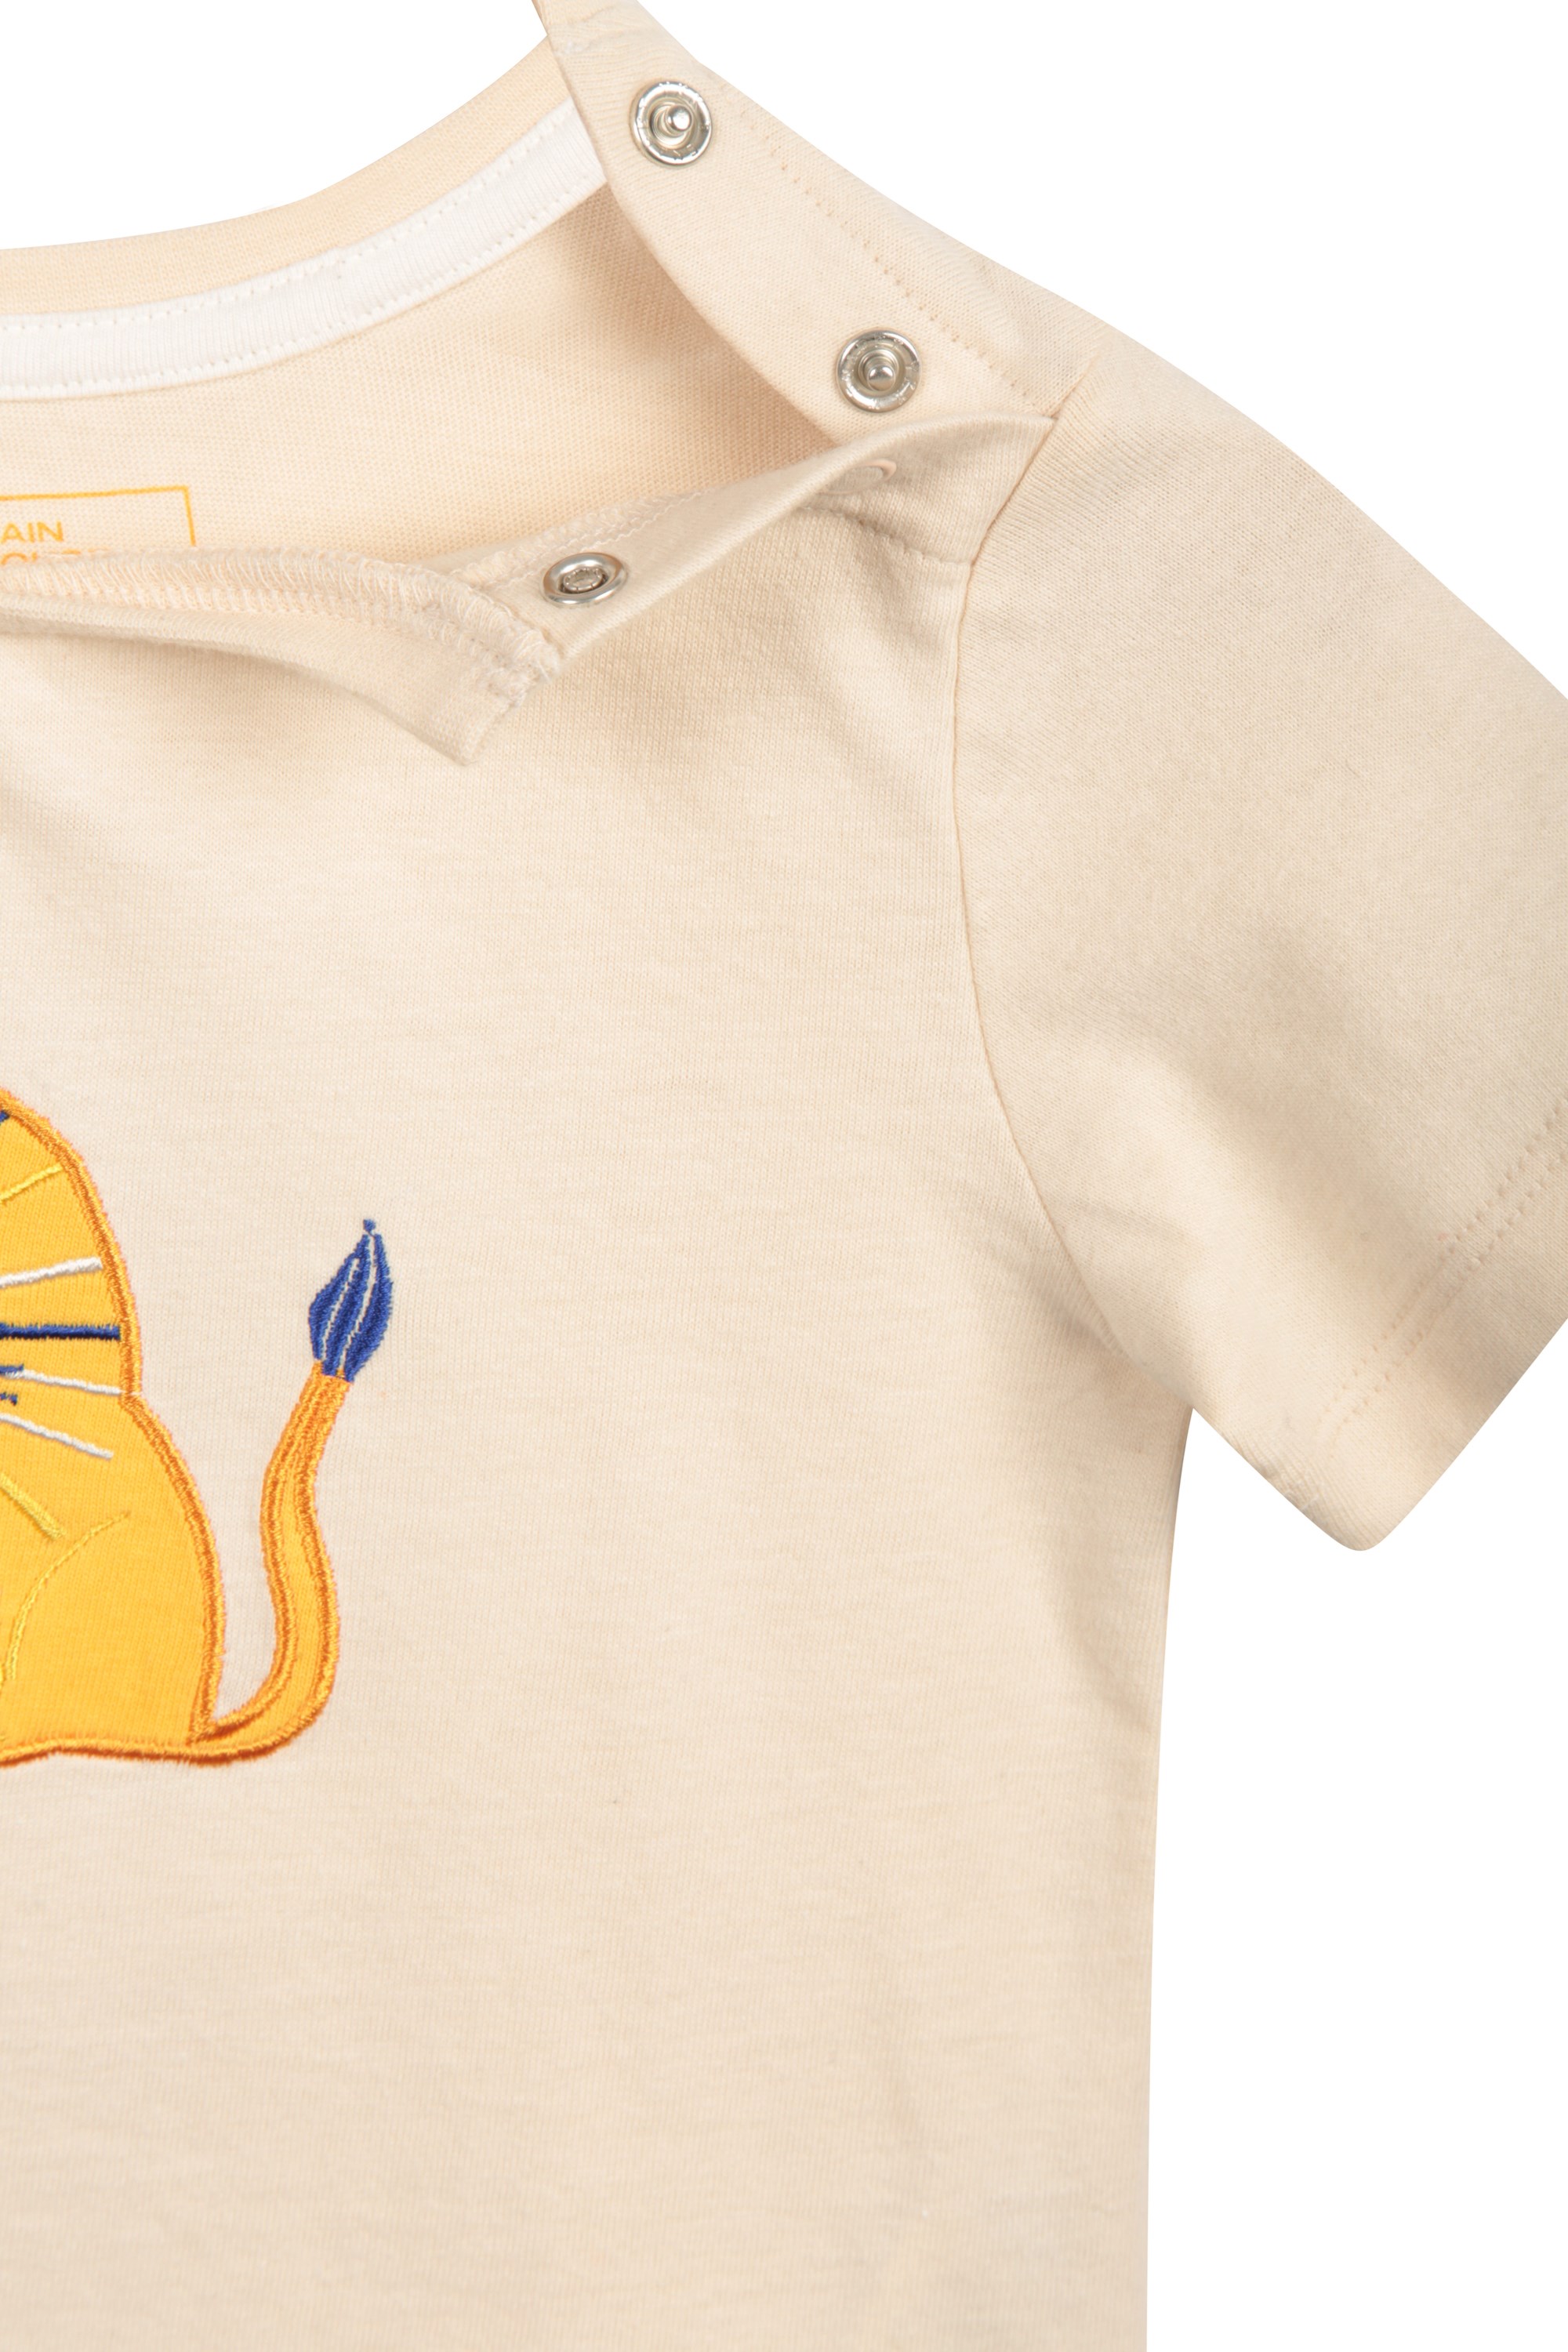 Lightweight Mountain Warehouse Baby Unisex Long Sleeve Applique T-Shirt 100% Cotton Jersey 